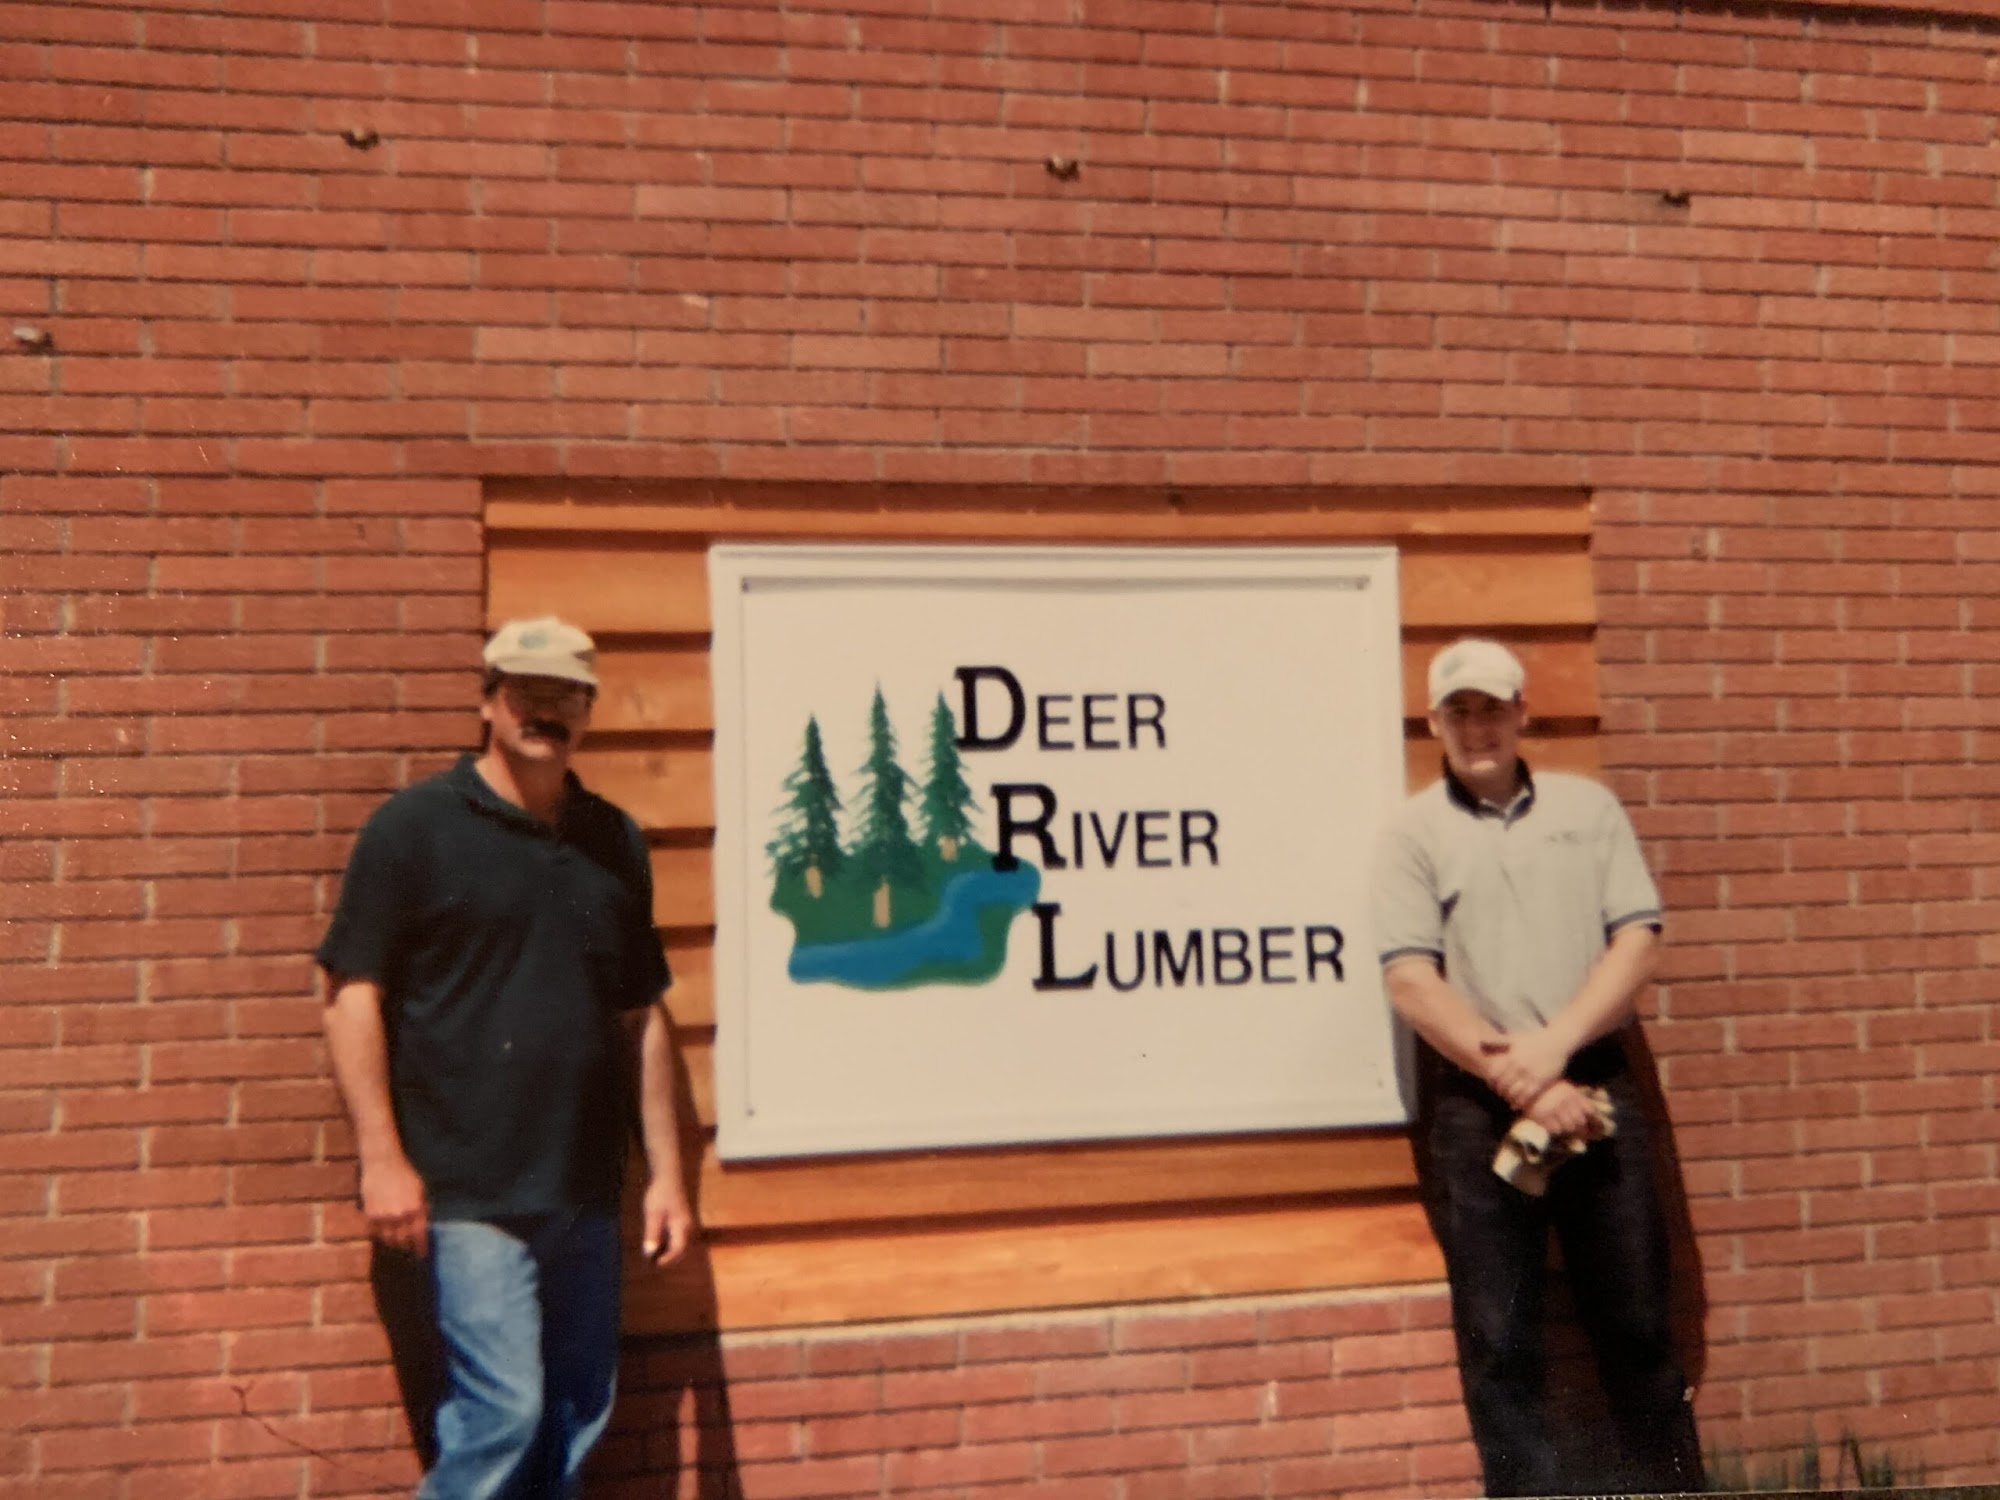 Deer River Lumber 1114 Co Rd 128, Deer River Minnesota 56636